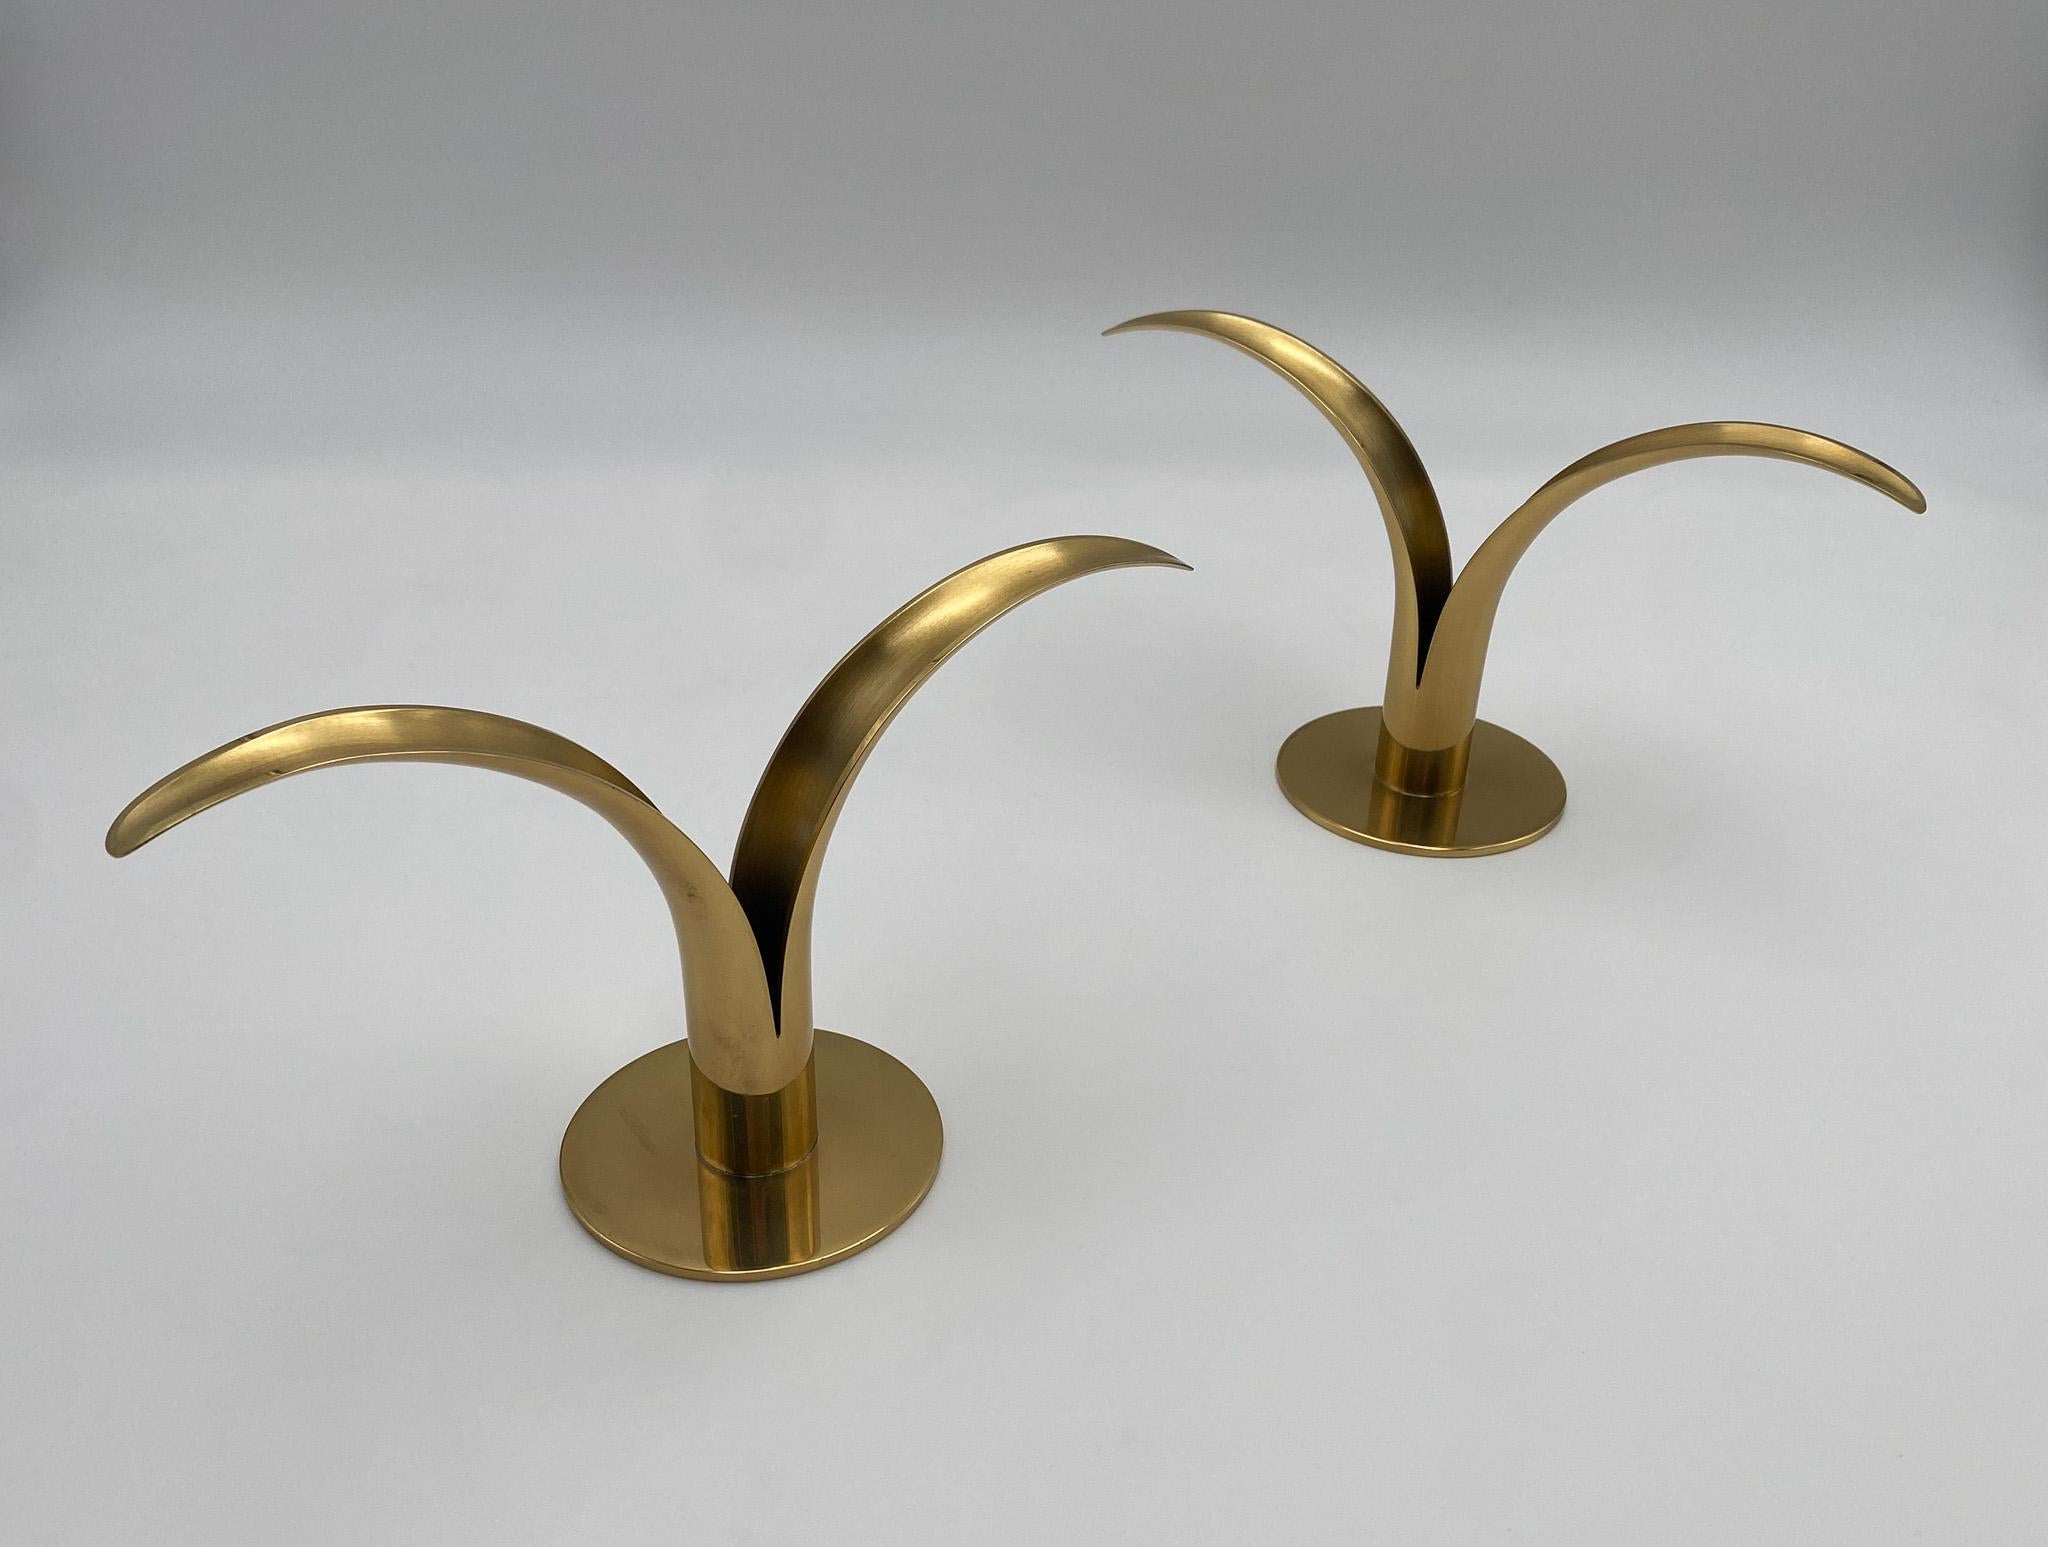 Ivar Ålenius Björk Brass Candle Holders for Ystad Metall, Sweden, 1960's 10